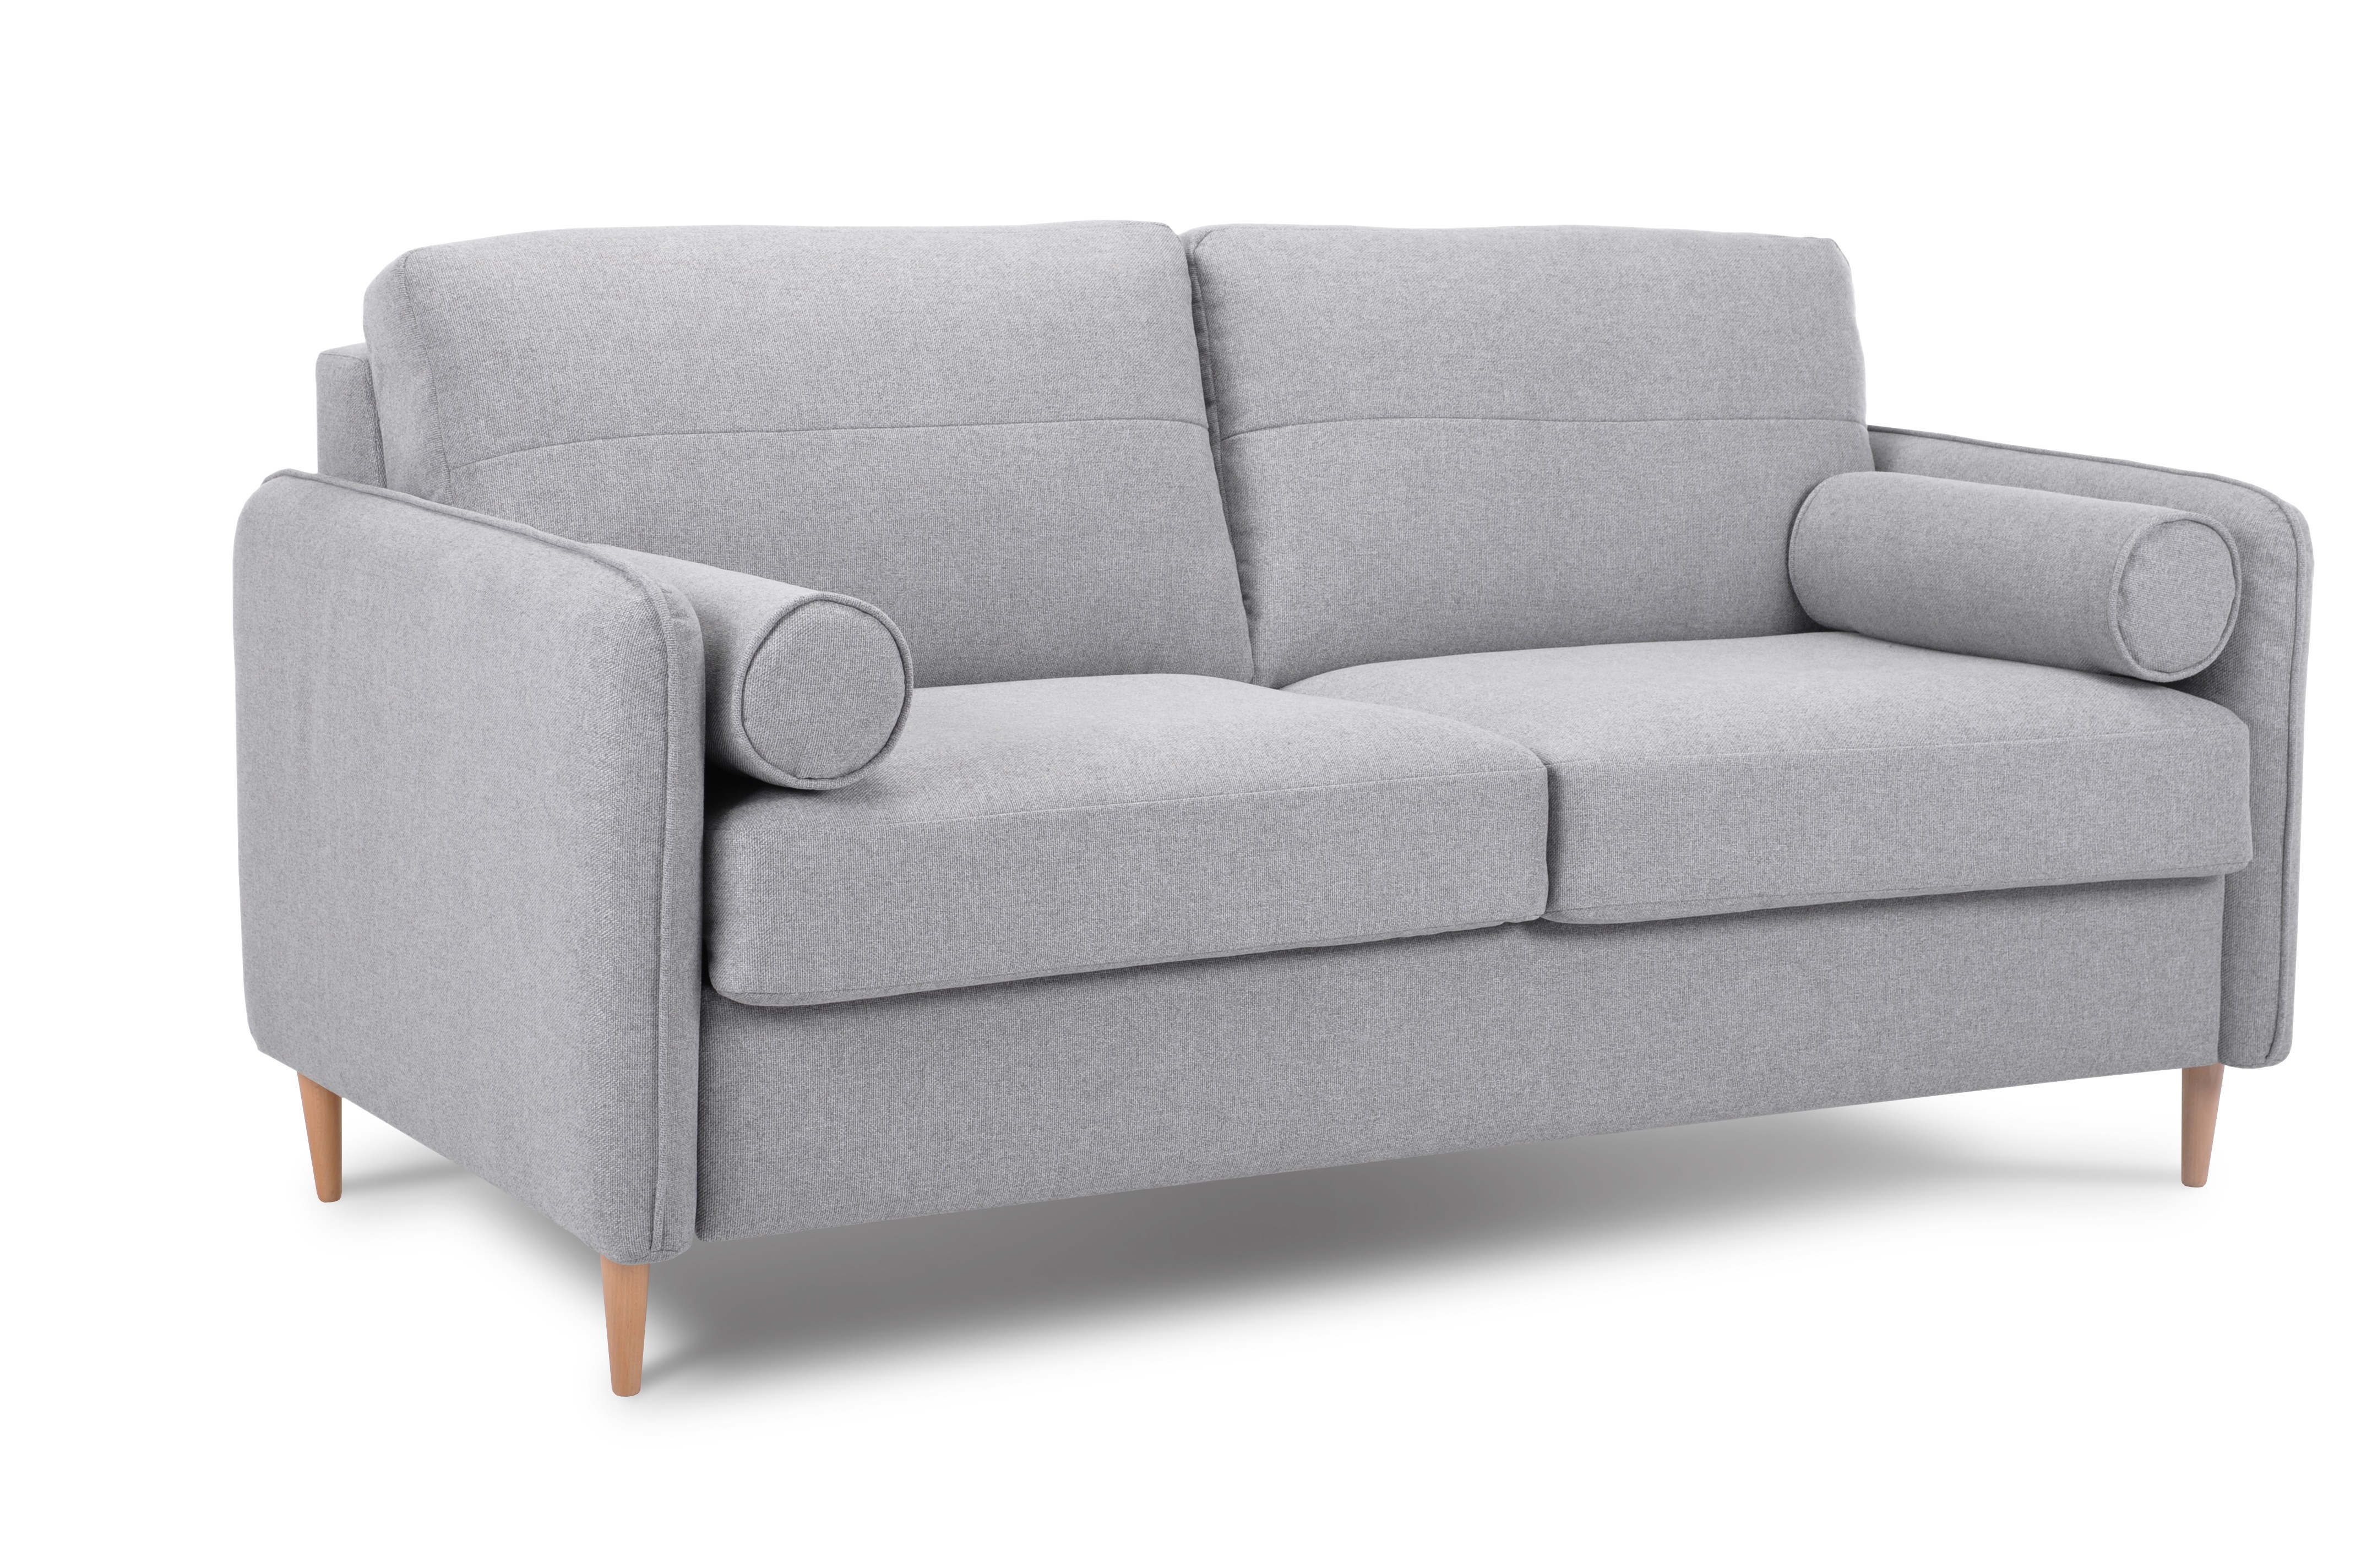 Sofa rozkładana COMPACT Meblex